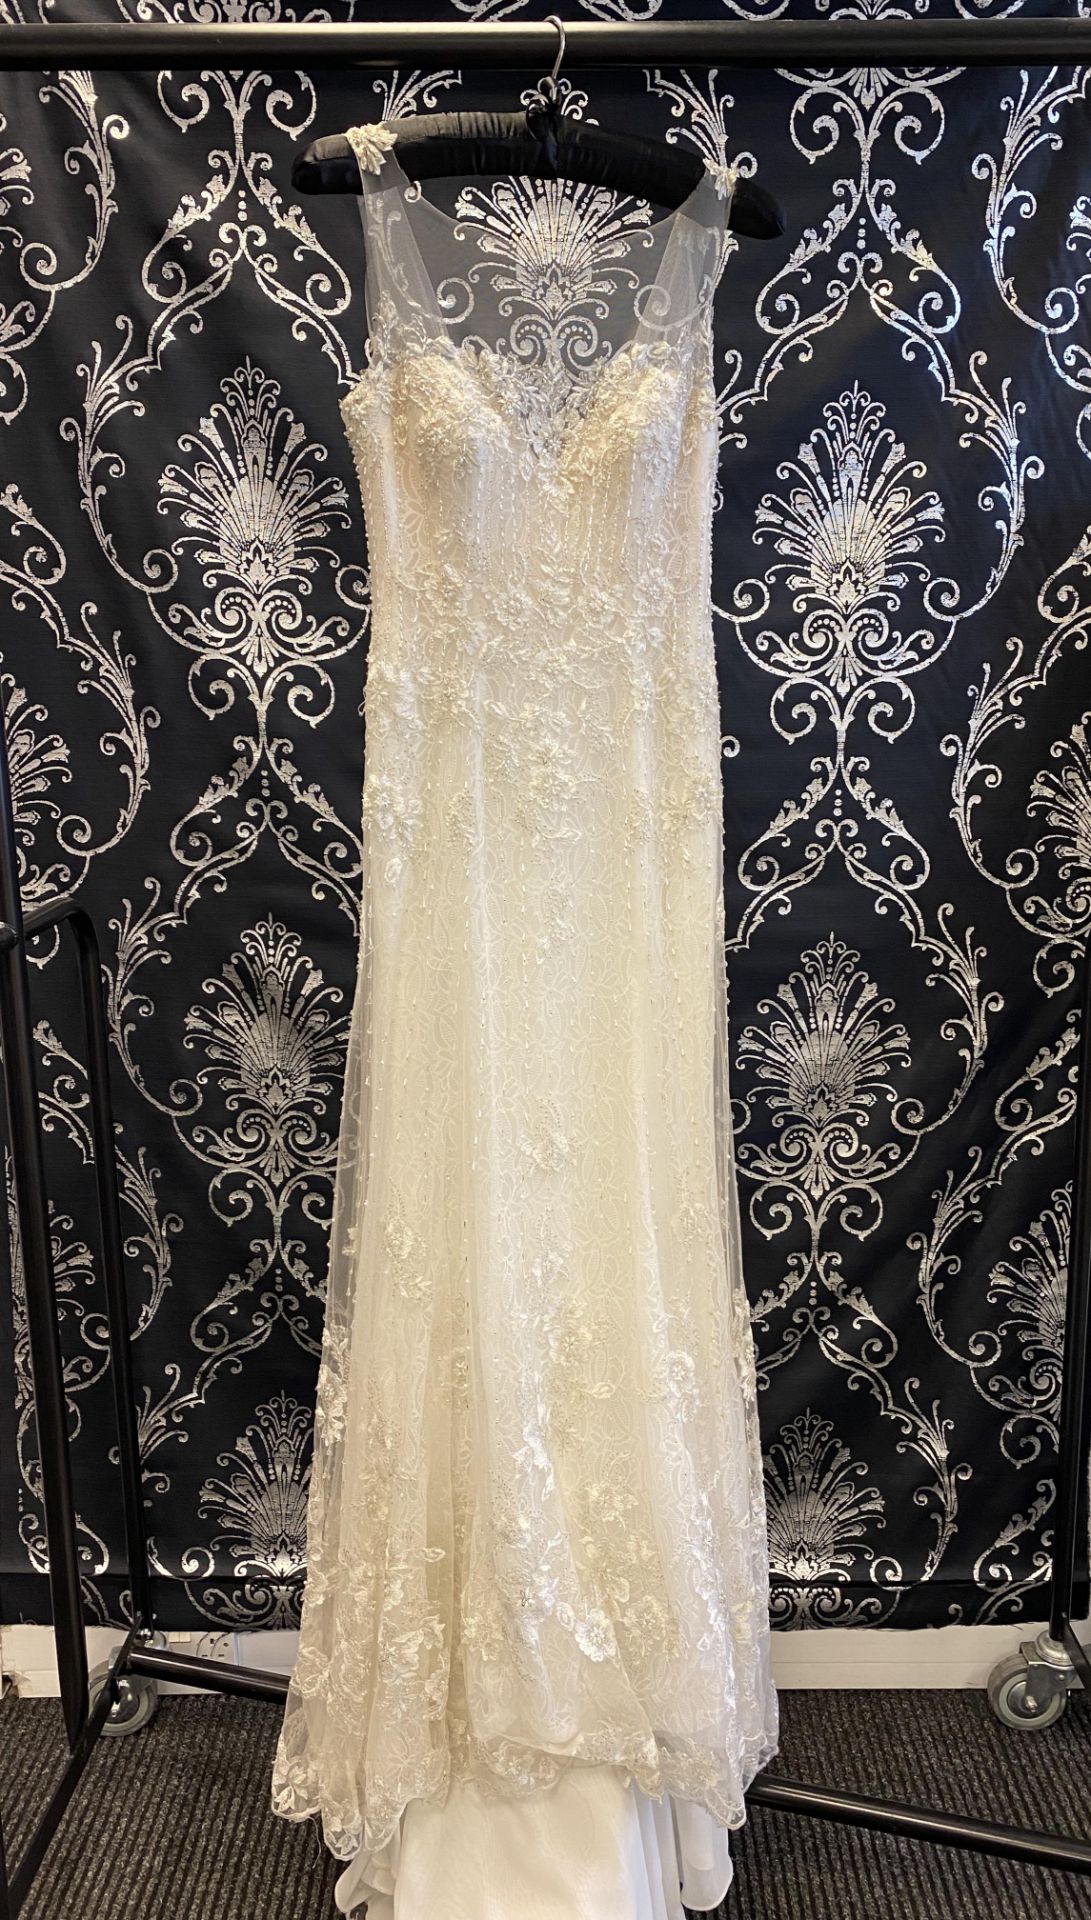 1 x LUSAN MANDONGUS 'Anastasia' Stunning Lace And Embroidered Designer Wedding Dress RRP £1,850 UK12